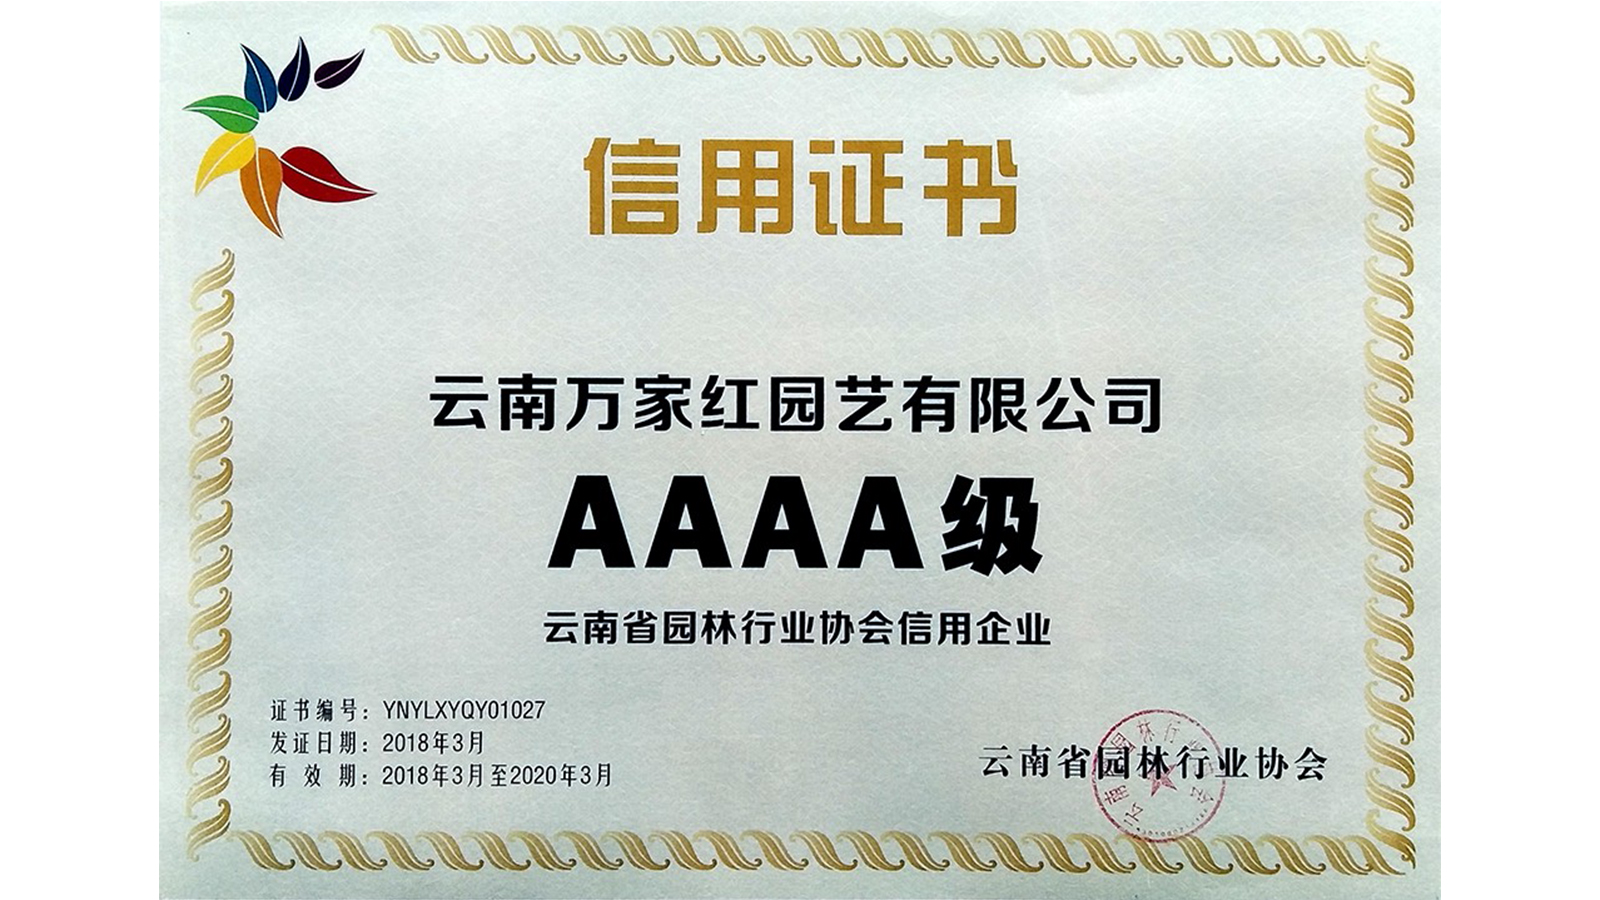 <b>云南省园林 行业协会“AAAA级信用”企业证书</b>